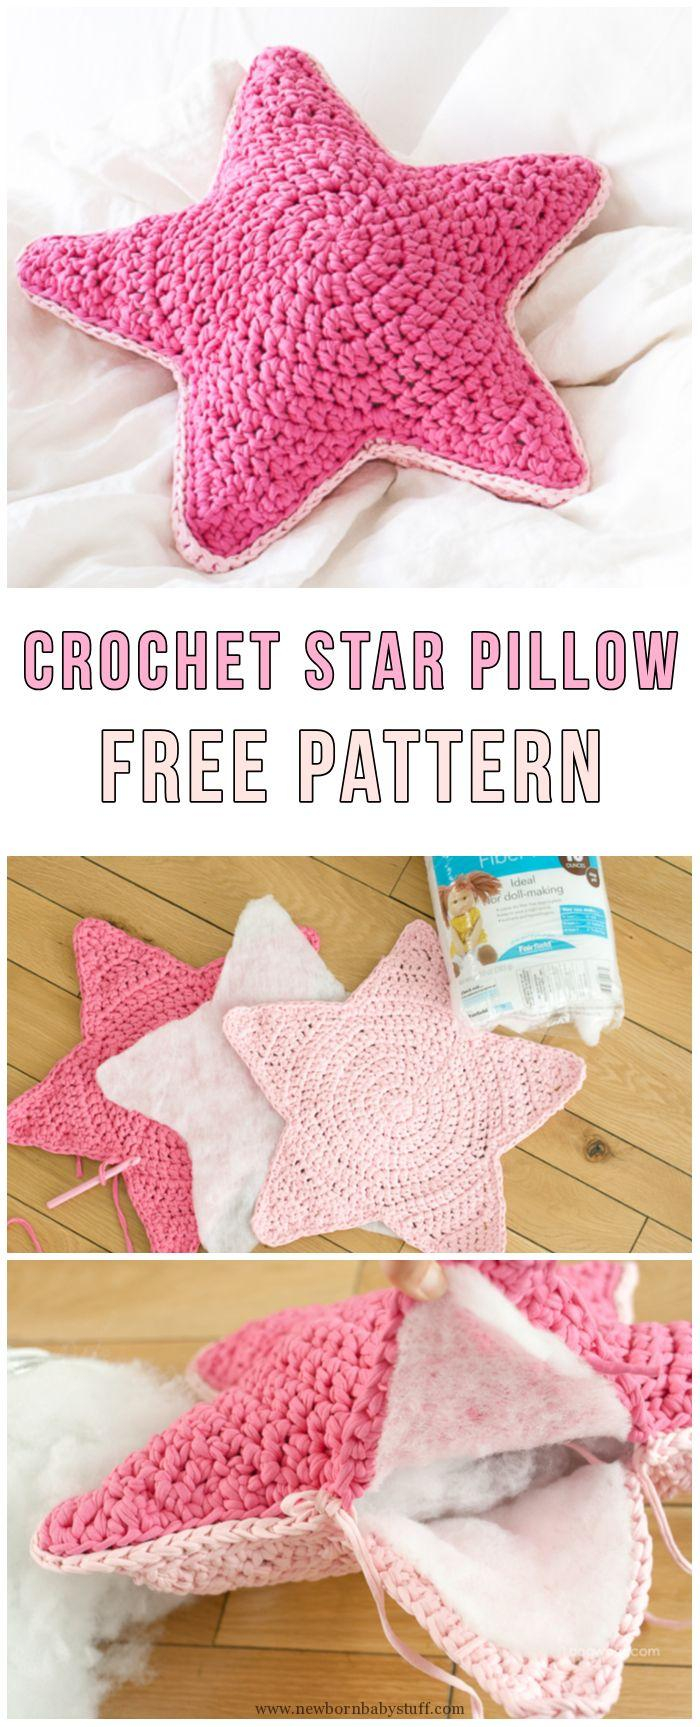 Free Cushion Knitting Patterns Ba Knitting Patterns Crochet Star Pillow Free Pattern Diy